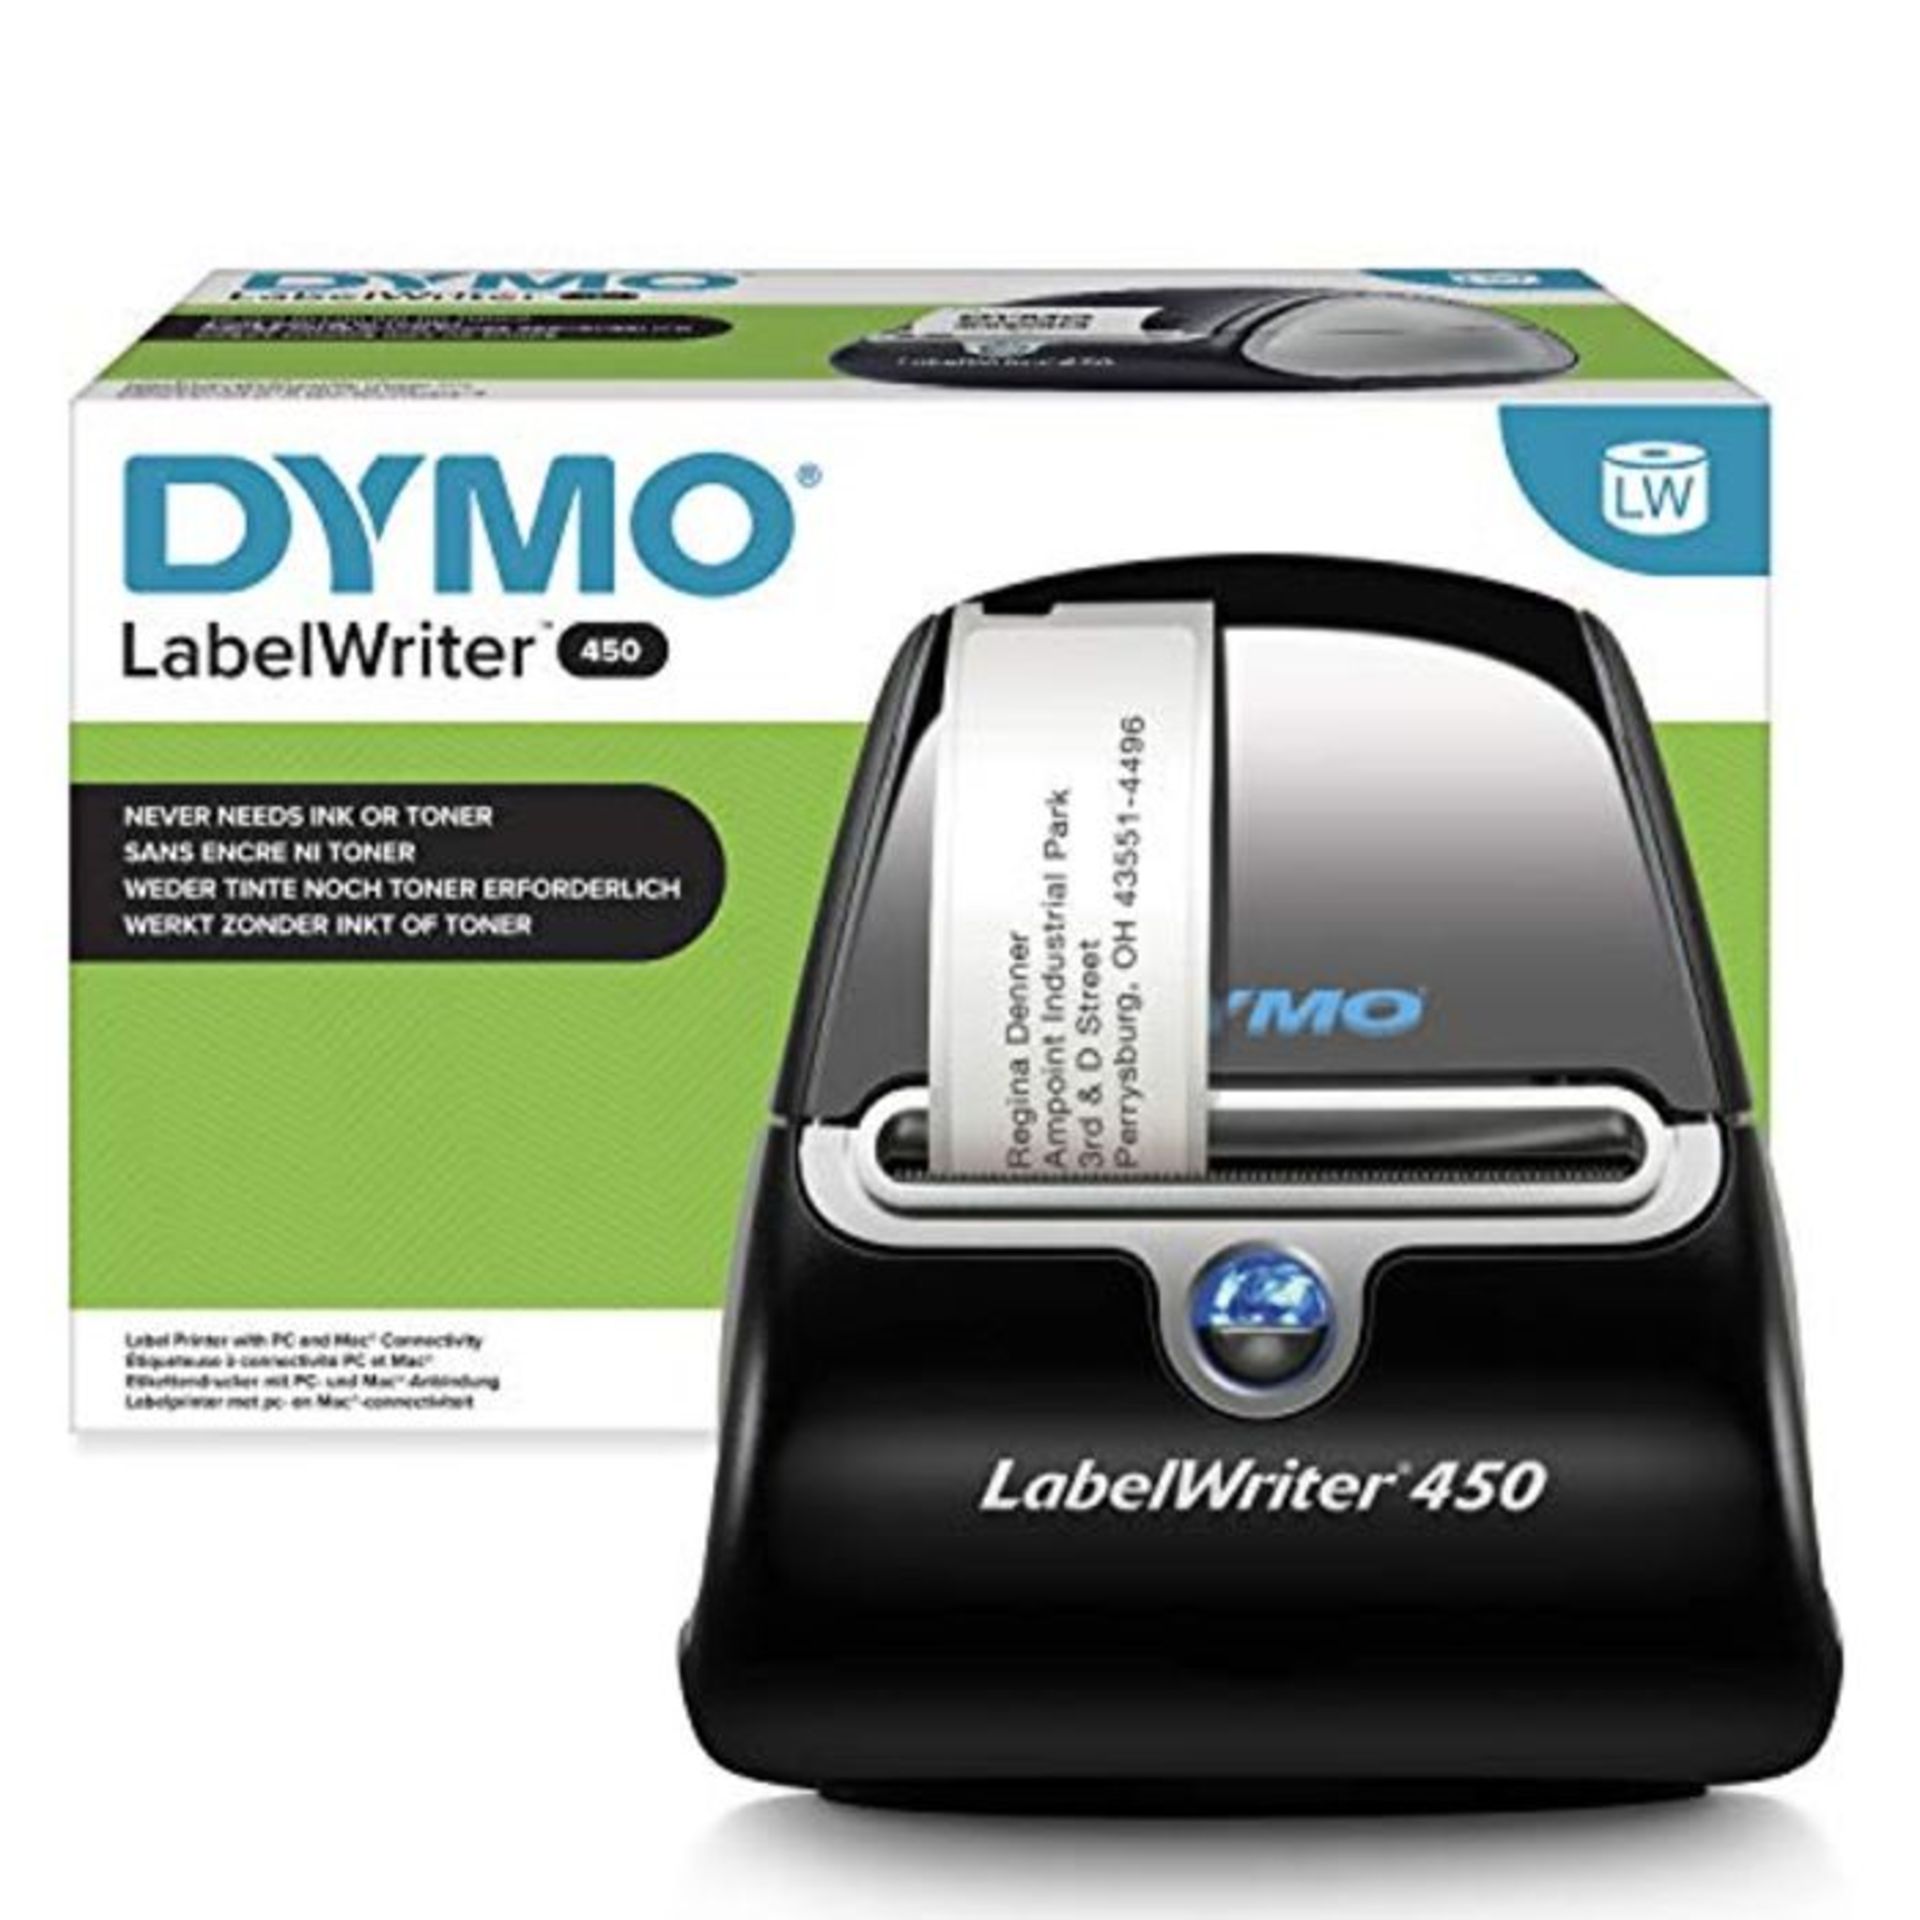 RRP £226.00 DYMO LabelWriter 450 Thermal Label Printer, Prints 51 LW Labels Per Minute